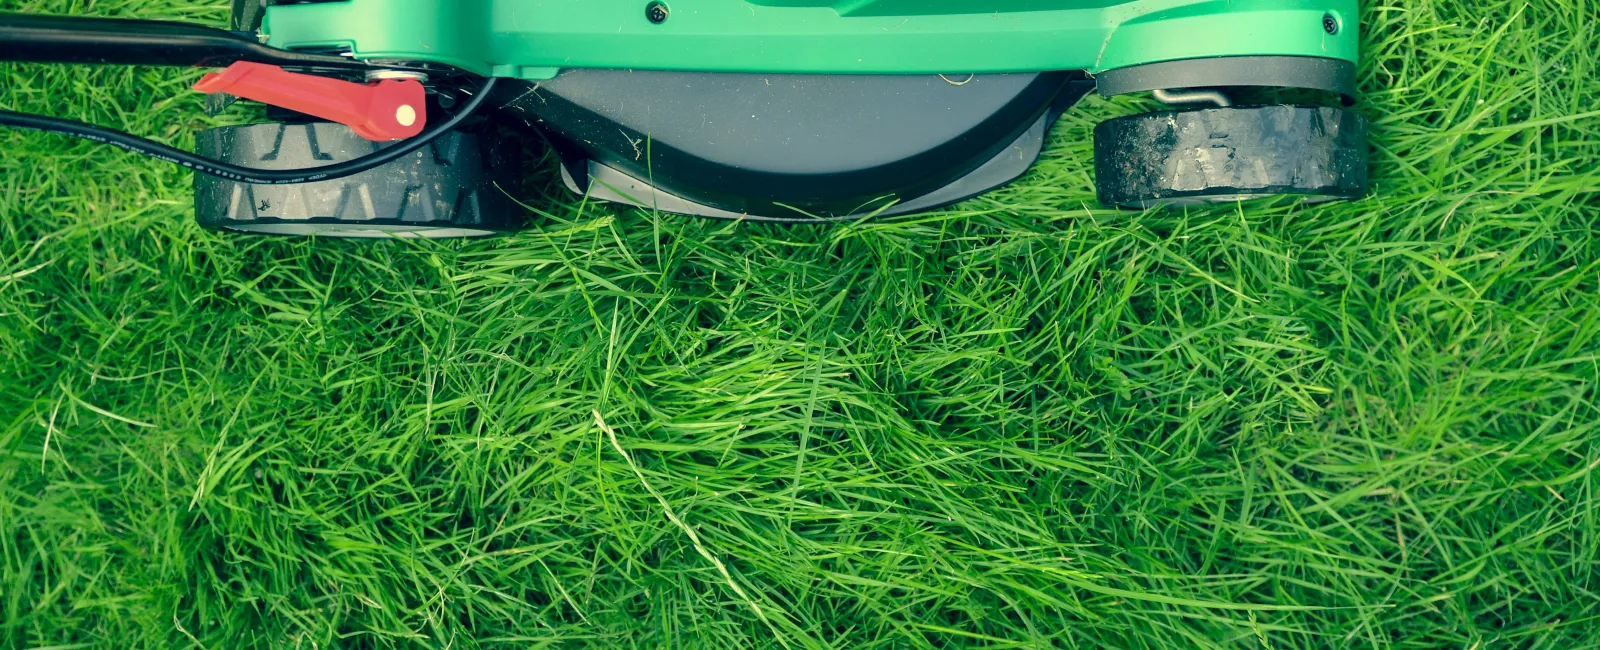 a green lawnmower on grass